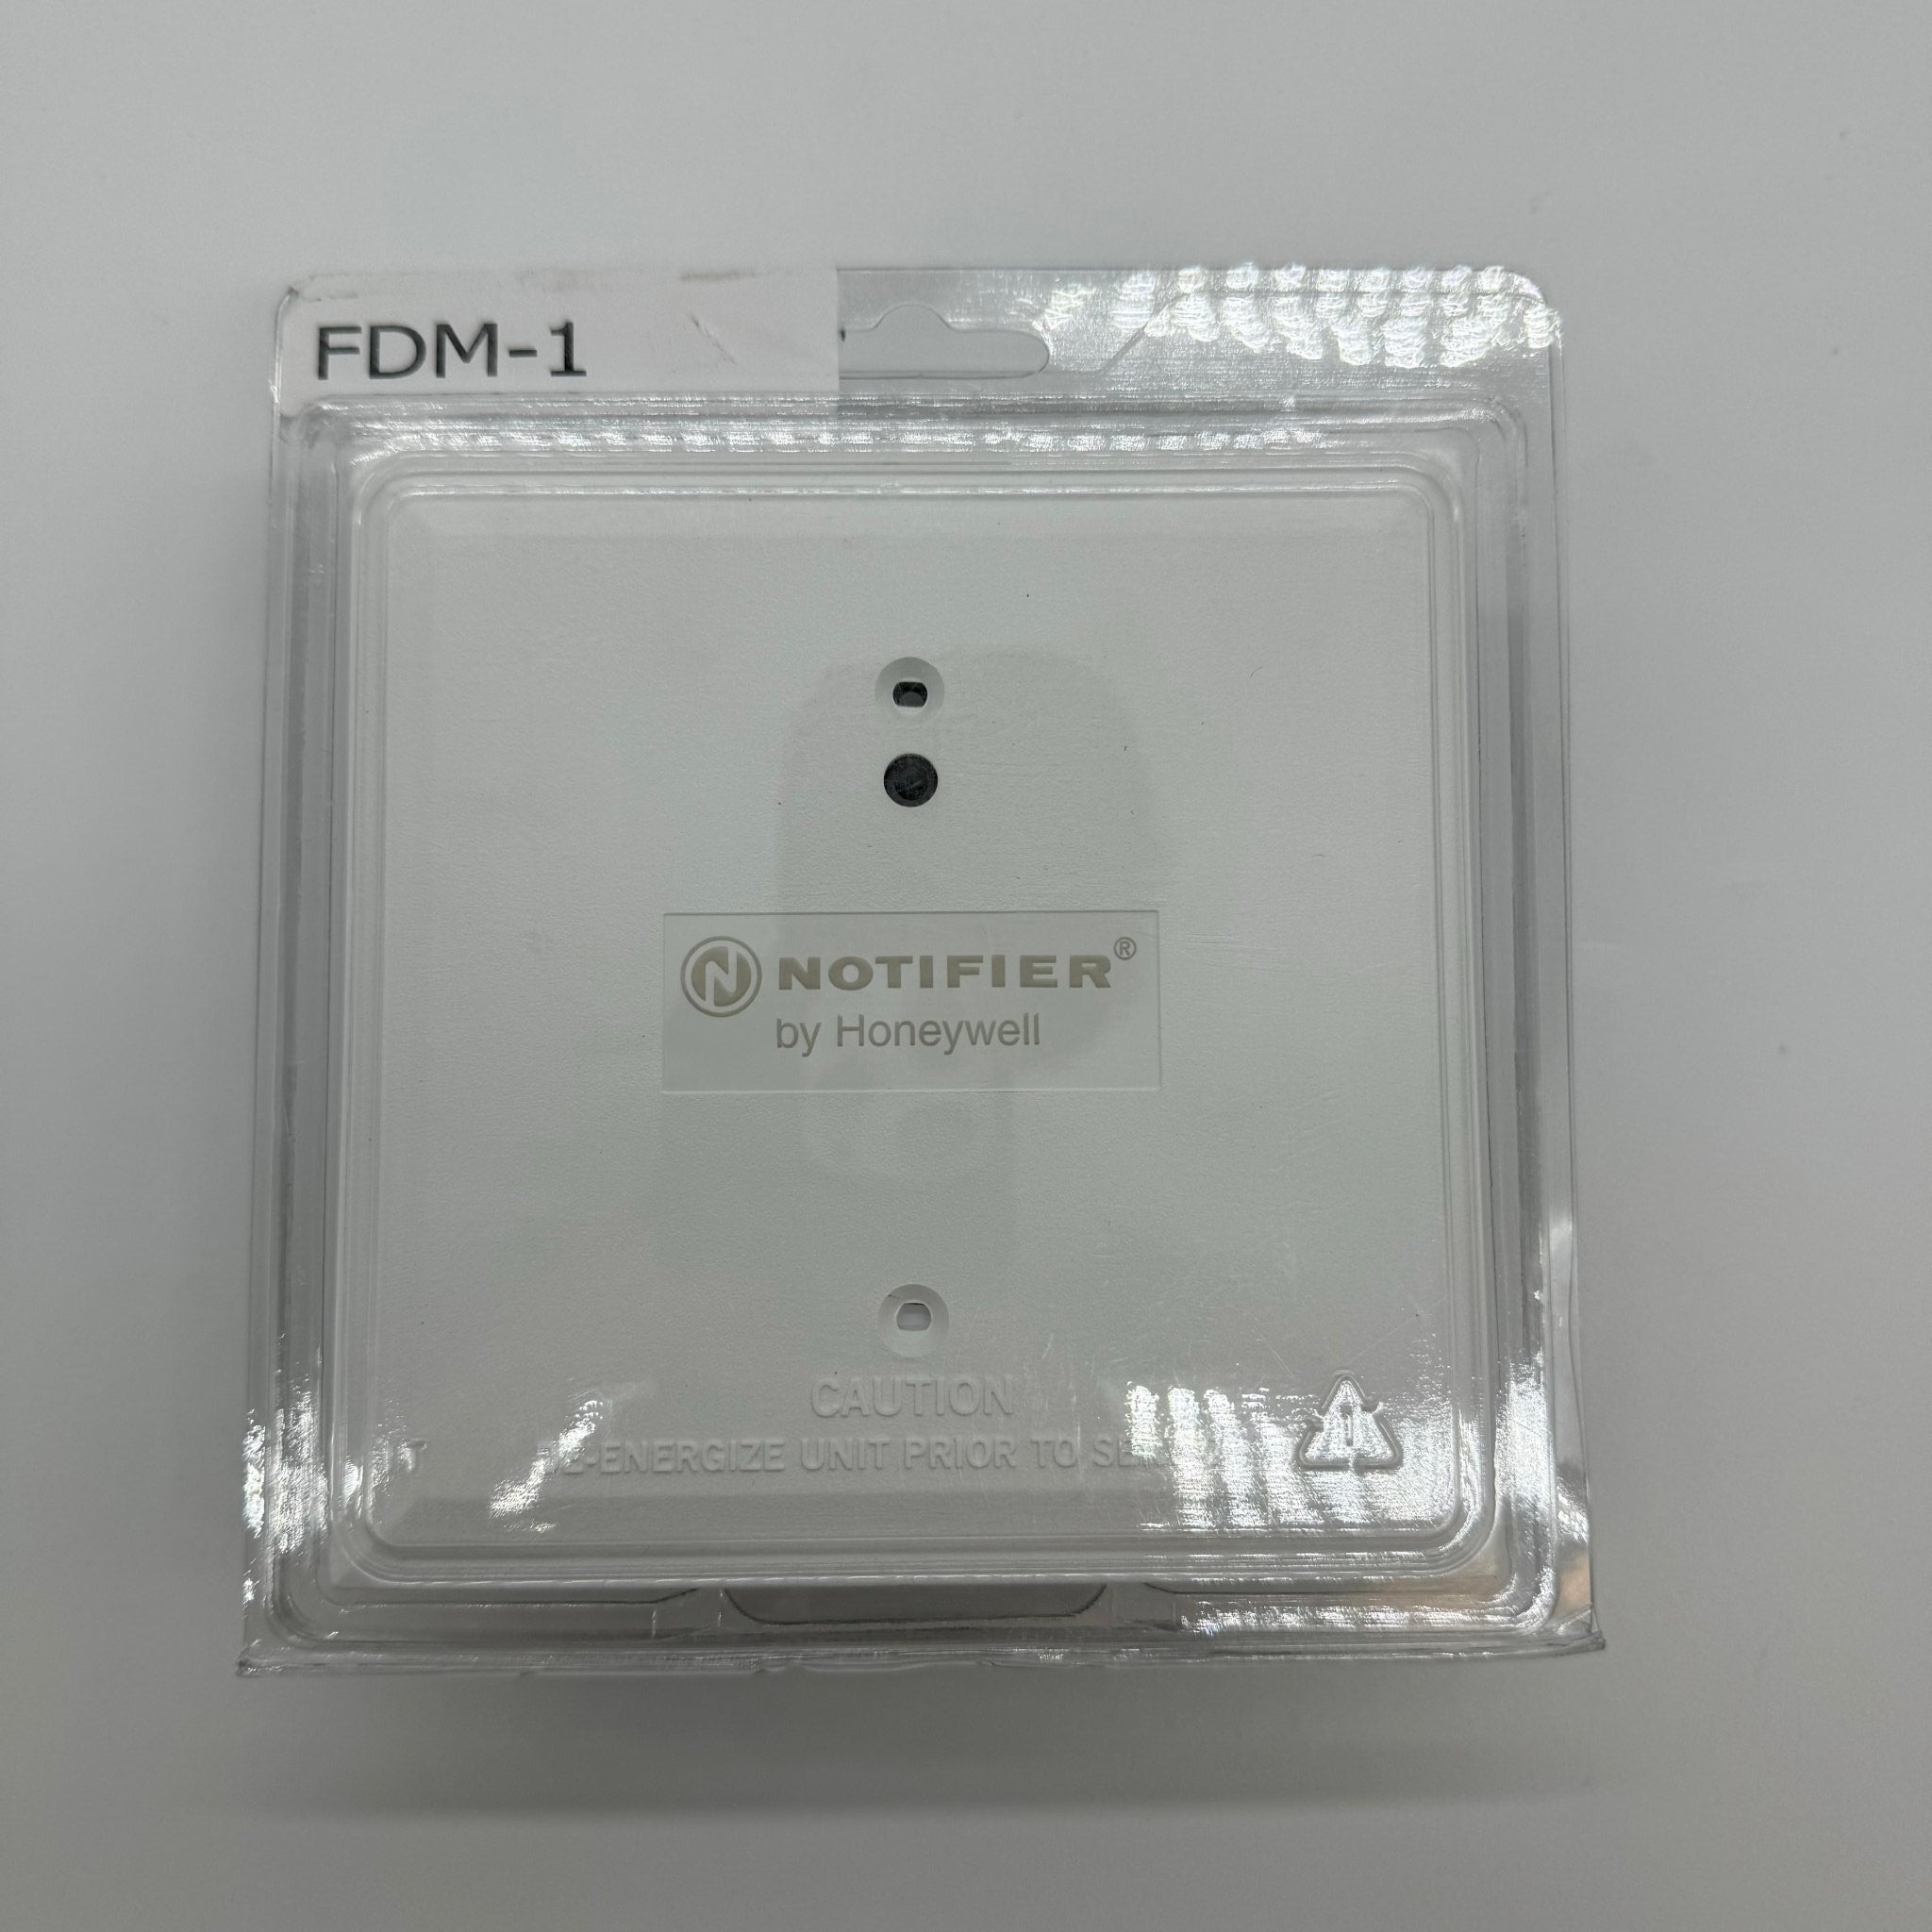 FDM-1 - The Fire Alarm Supplier